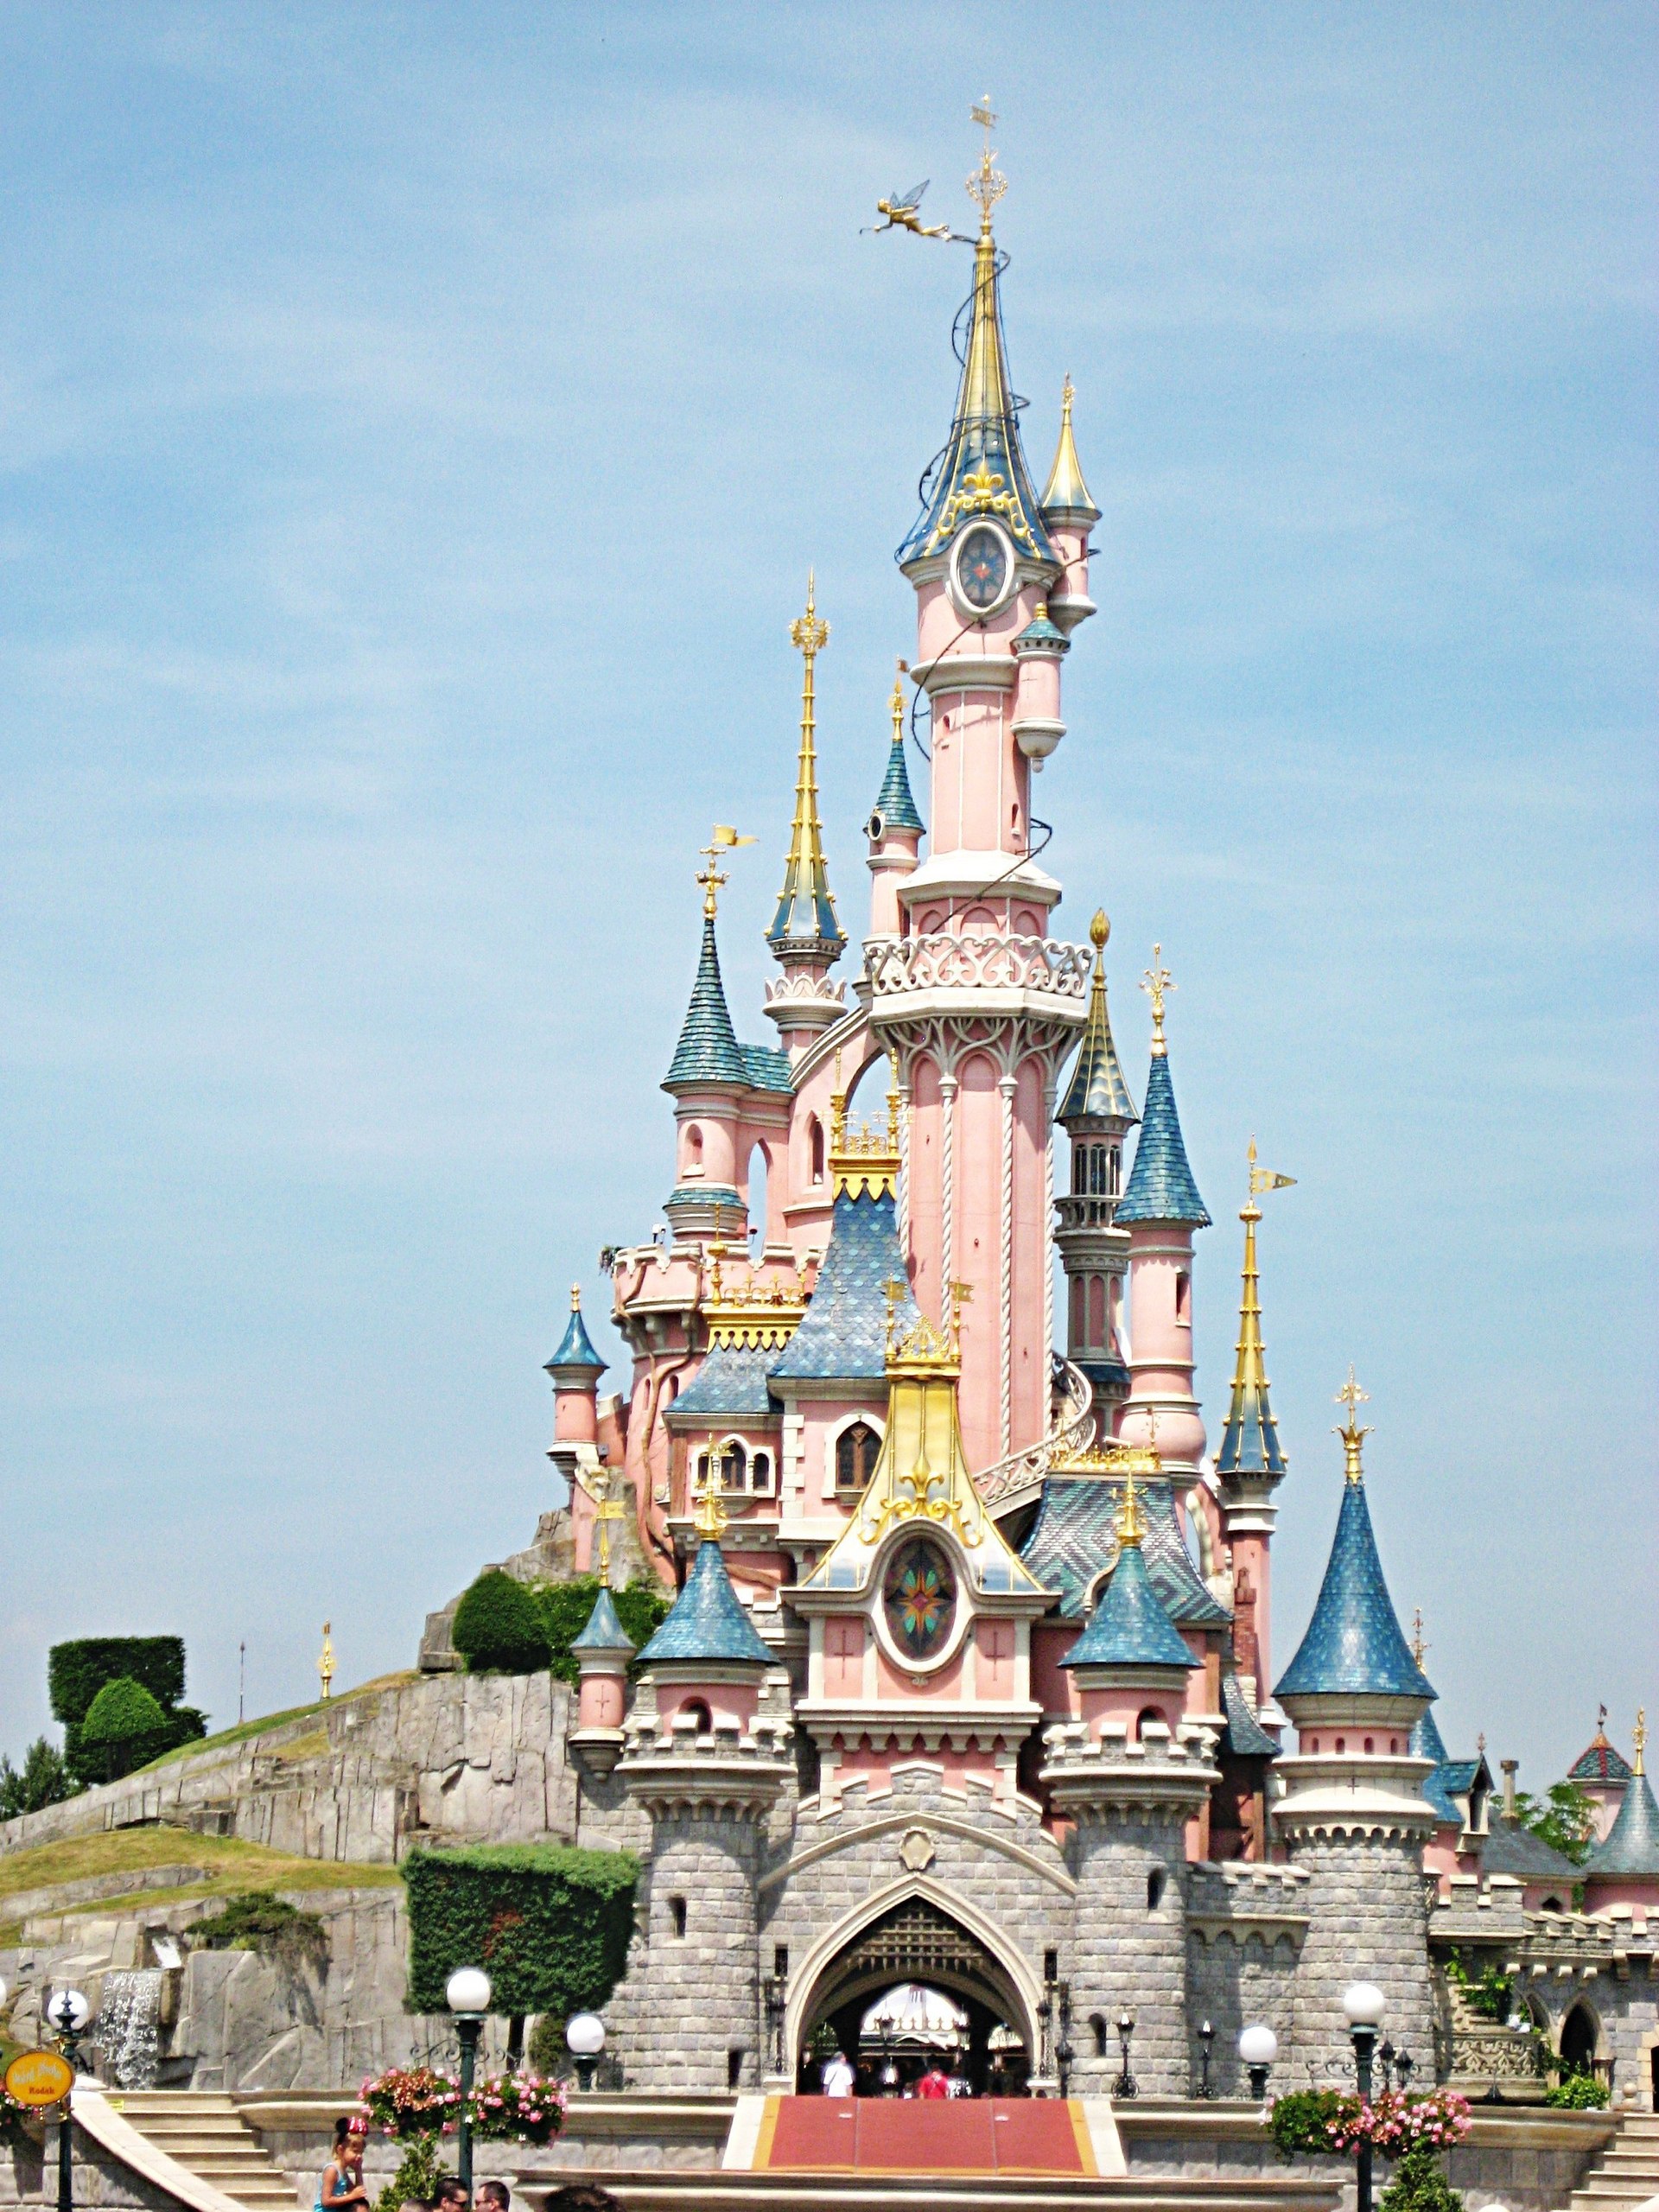 Disney Princess Image The Sleeping Beauty Castle Disneyland